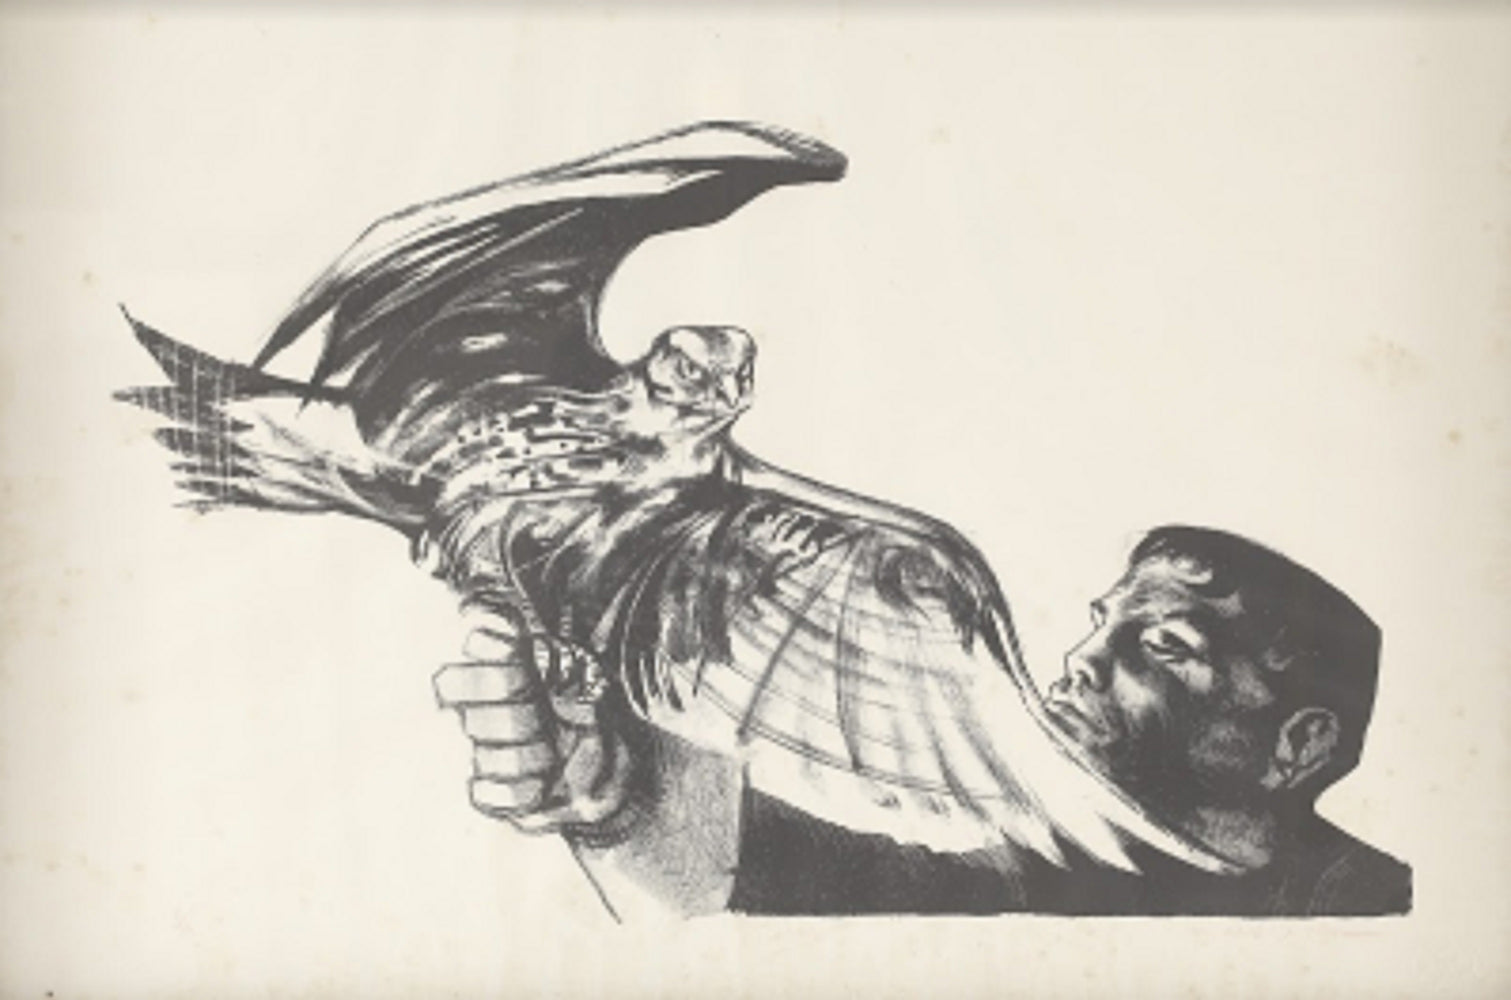 A falconer, Monochrome print by Michael Ayrton